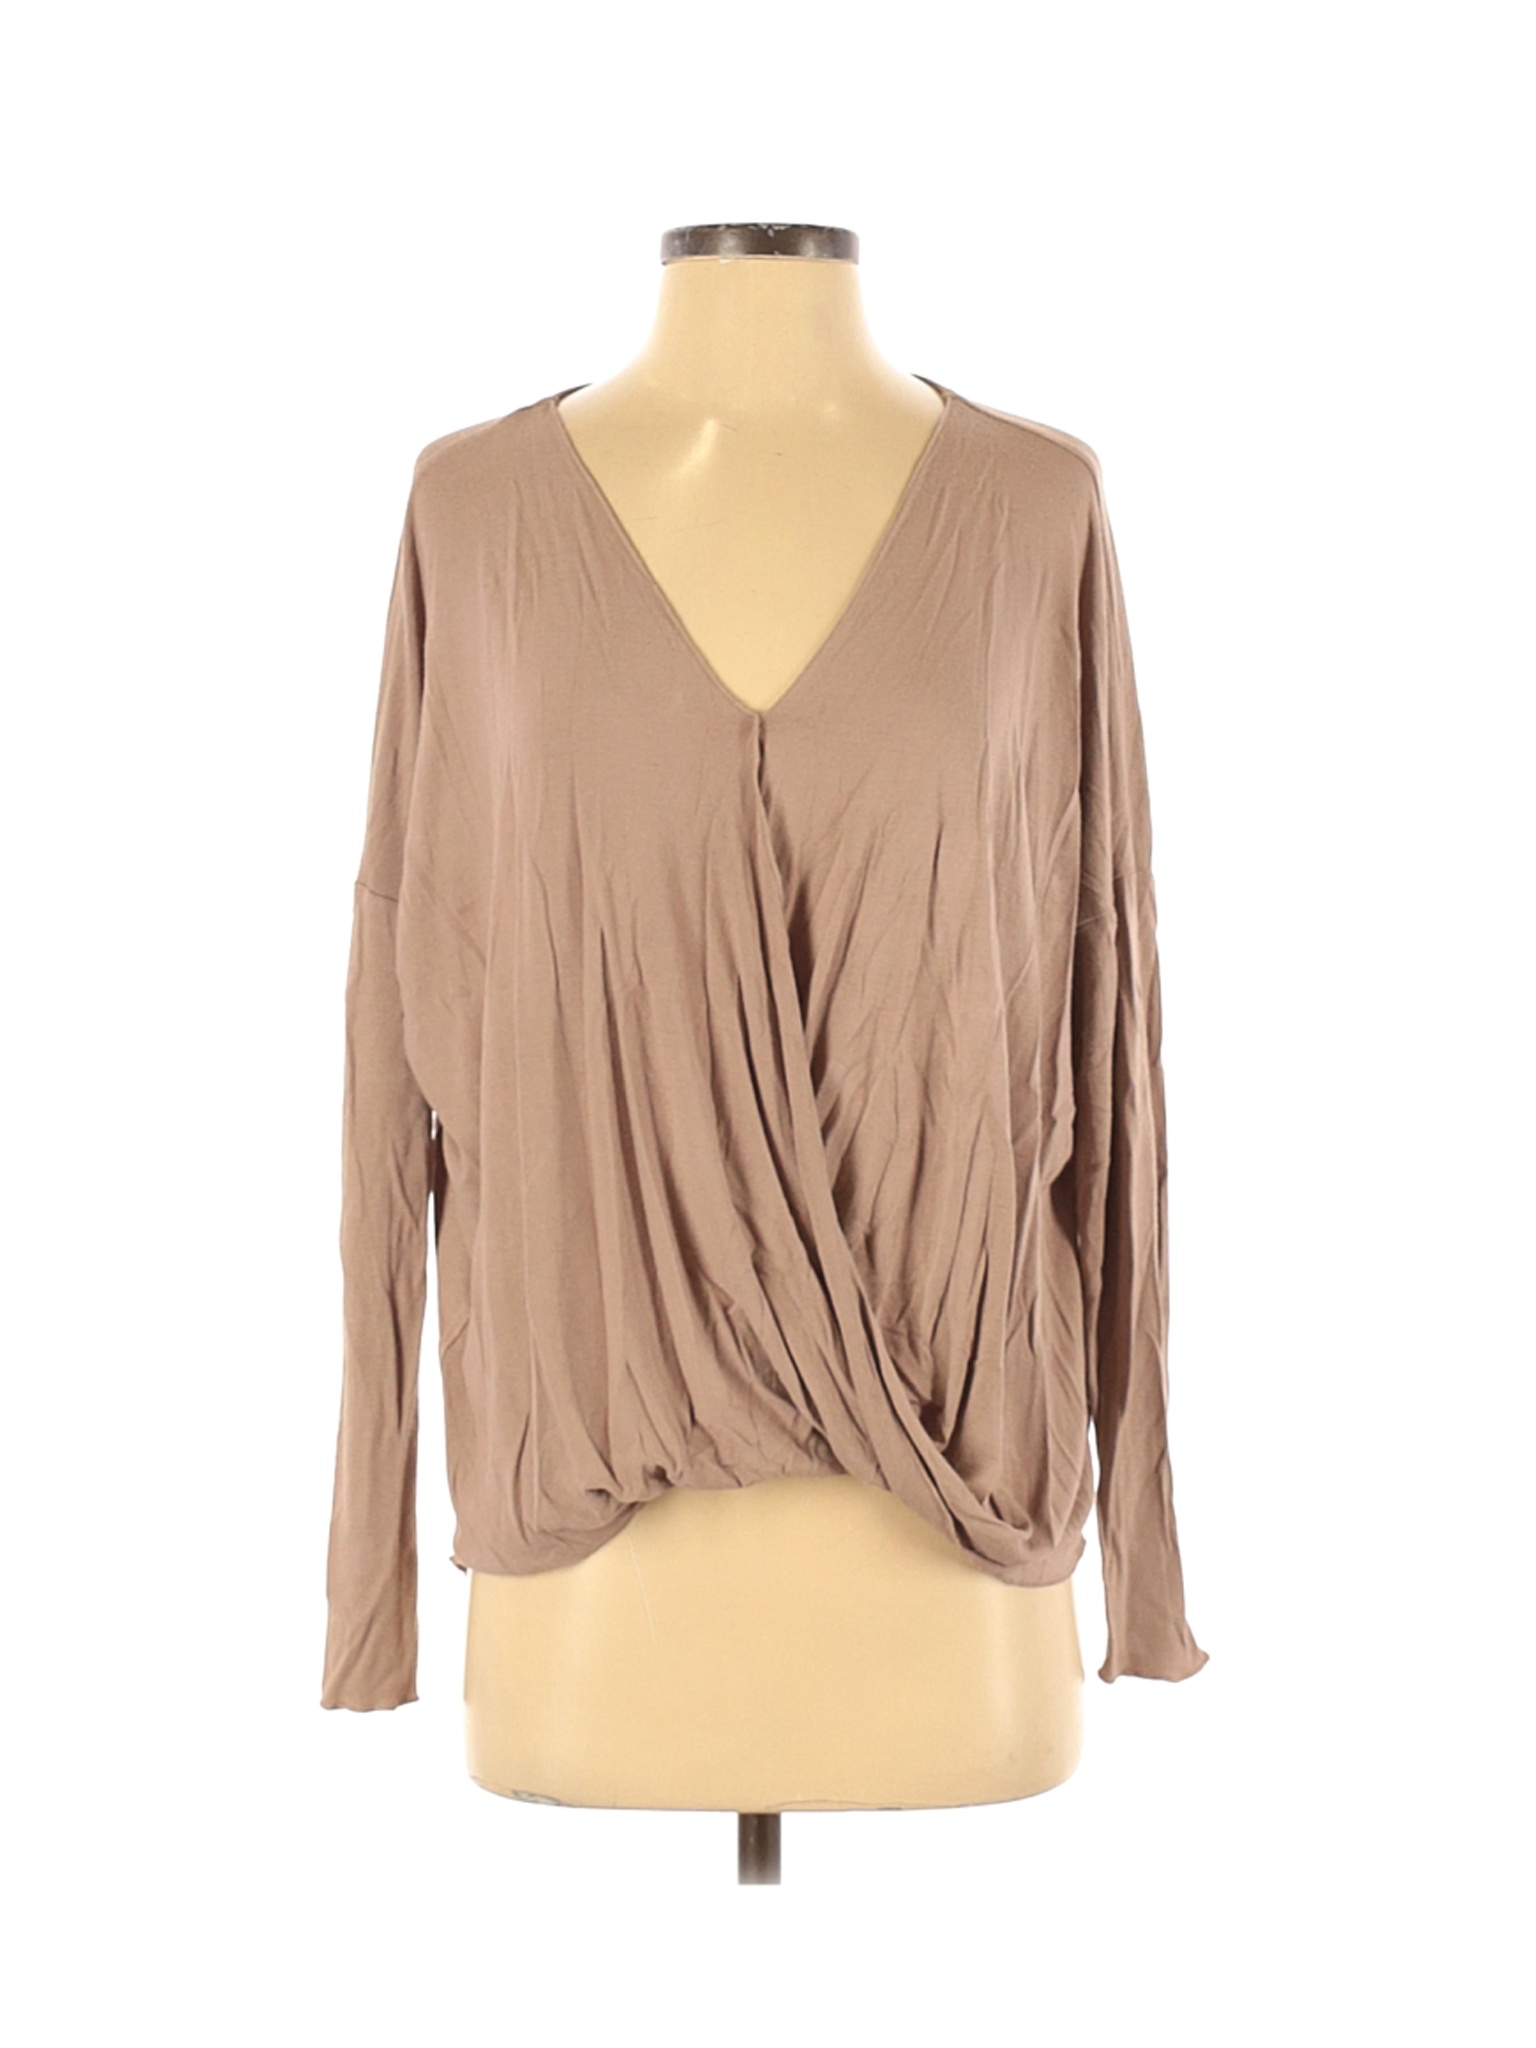 2Bella Women Brown Long Sleeve Top M | eBay